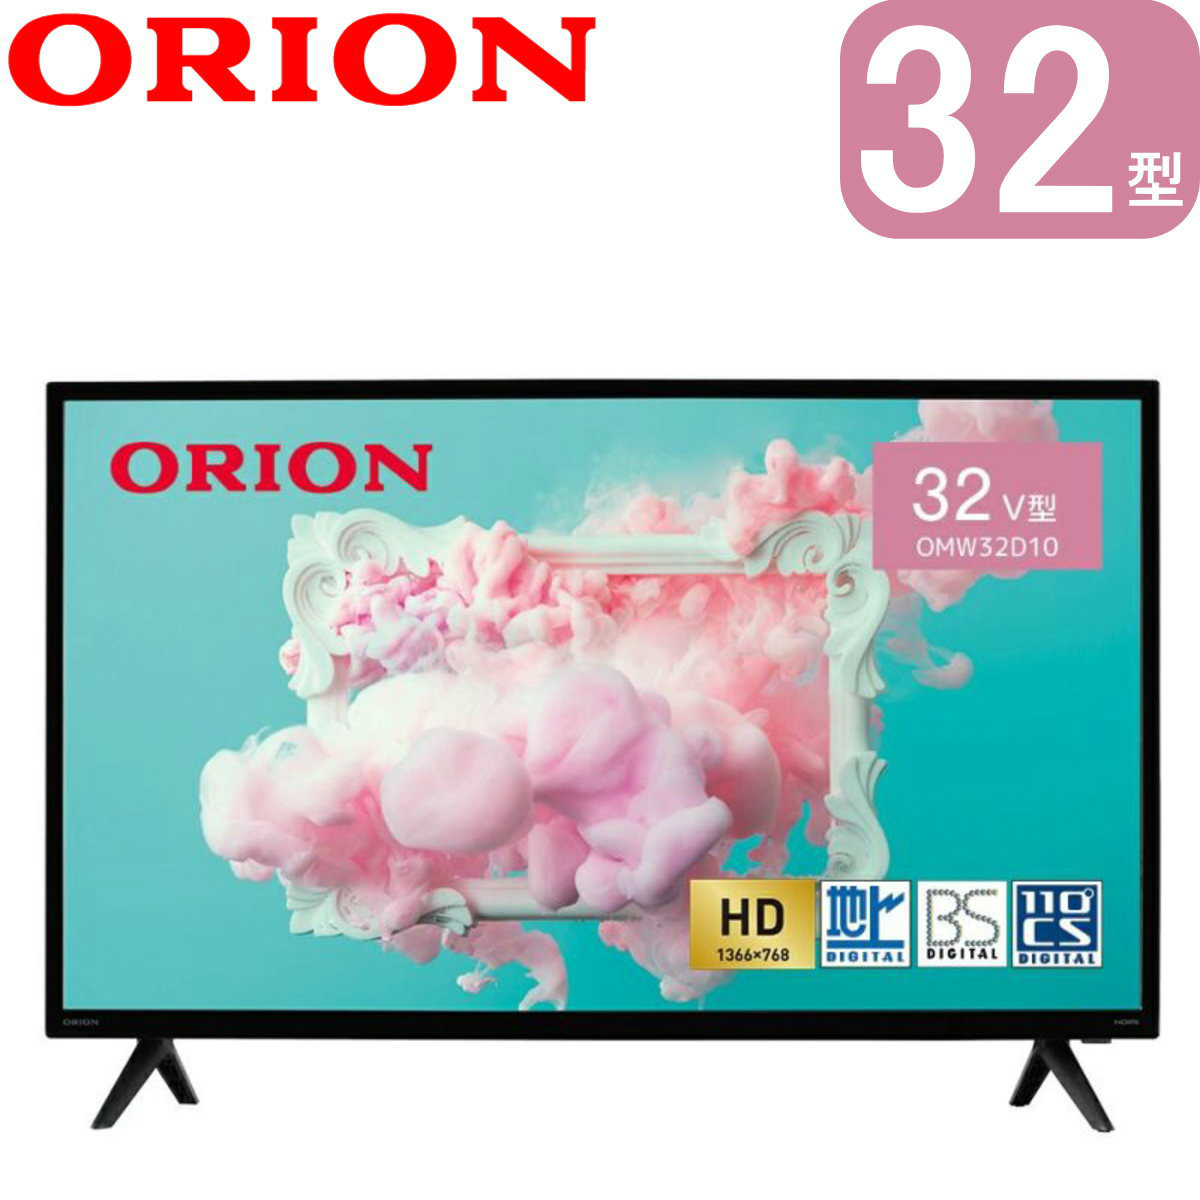 ORION 32v型 ハイビジョン液晶テレビ OMW32D10 | USBハードディスク録画 32型1K | オリオン 1年保証